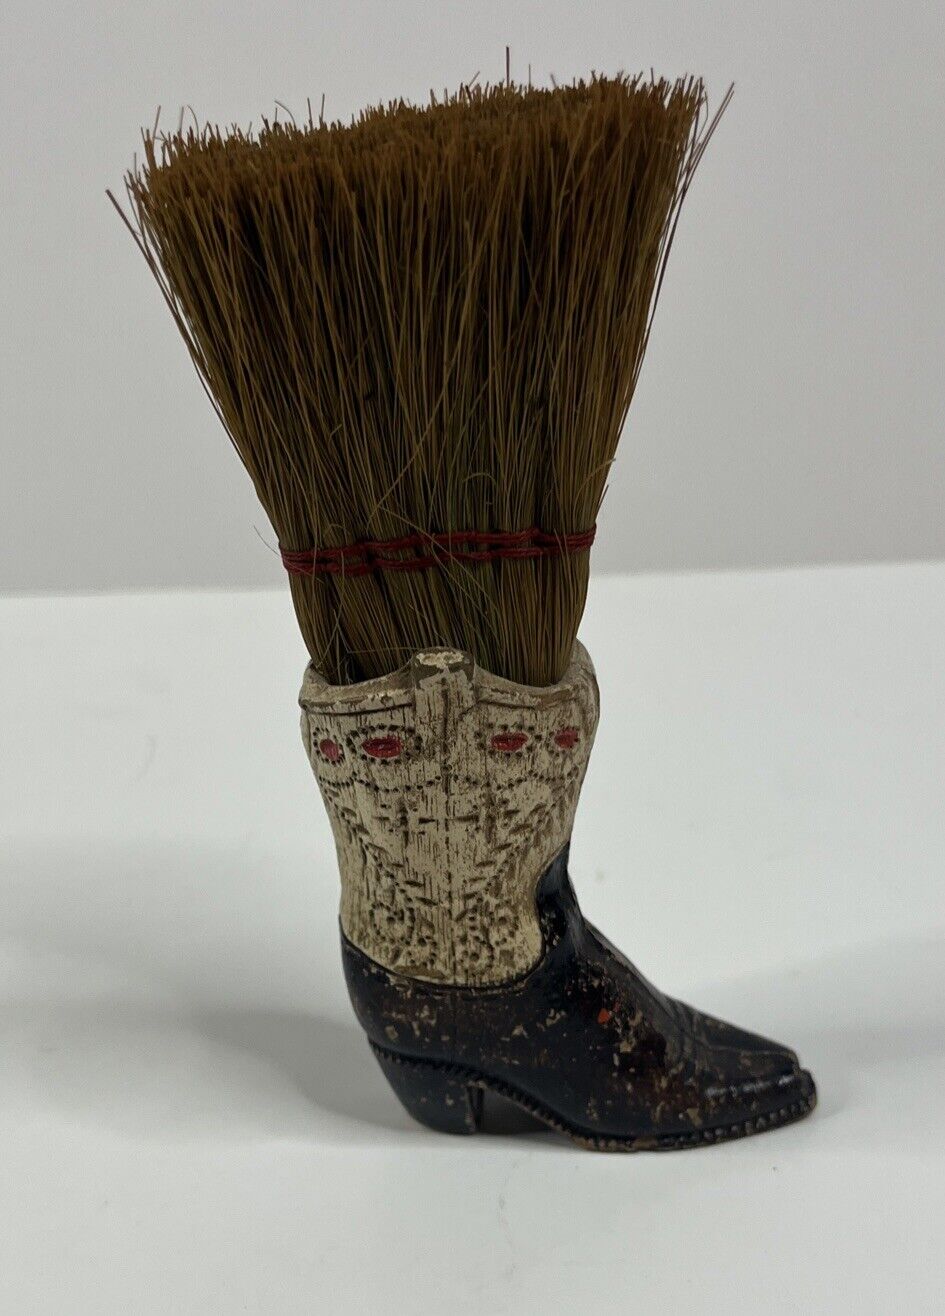 Vintage Cowboy Boot Clothes Brush Whisk Broom Novelty NICE 6''